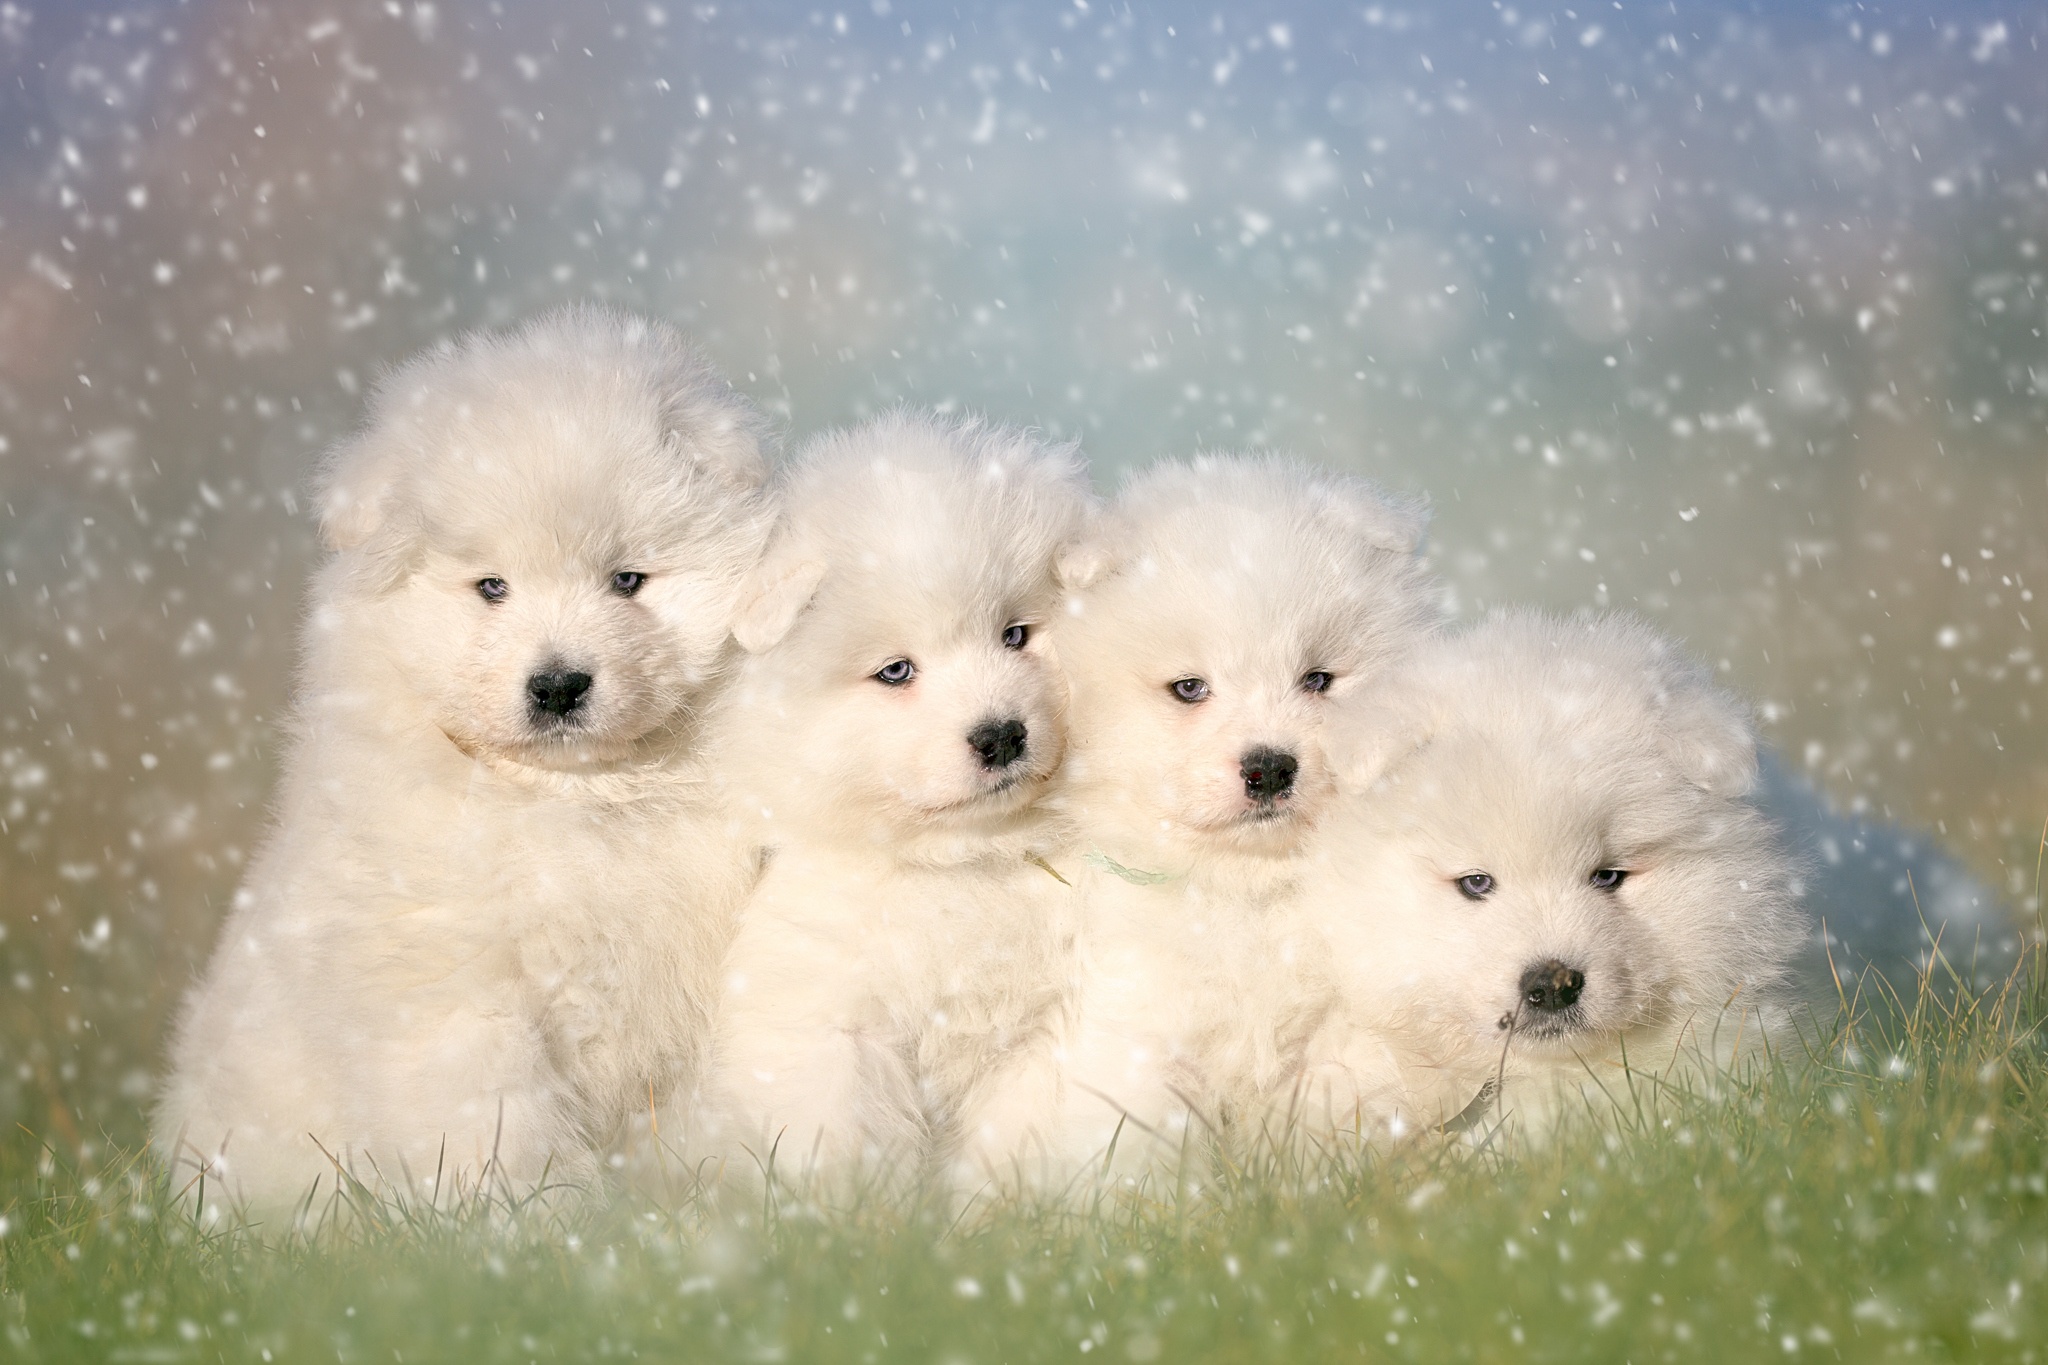 Windows Backgrounds animal, samoyed, baby animal, cute, dog, fluffy, puppy, dogs